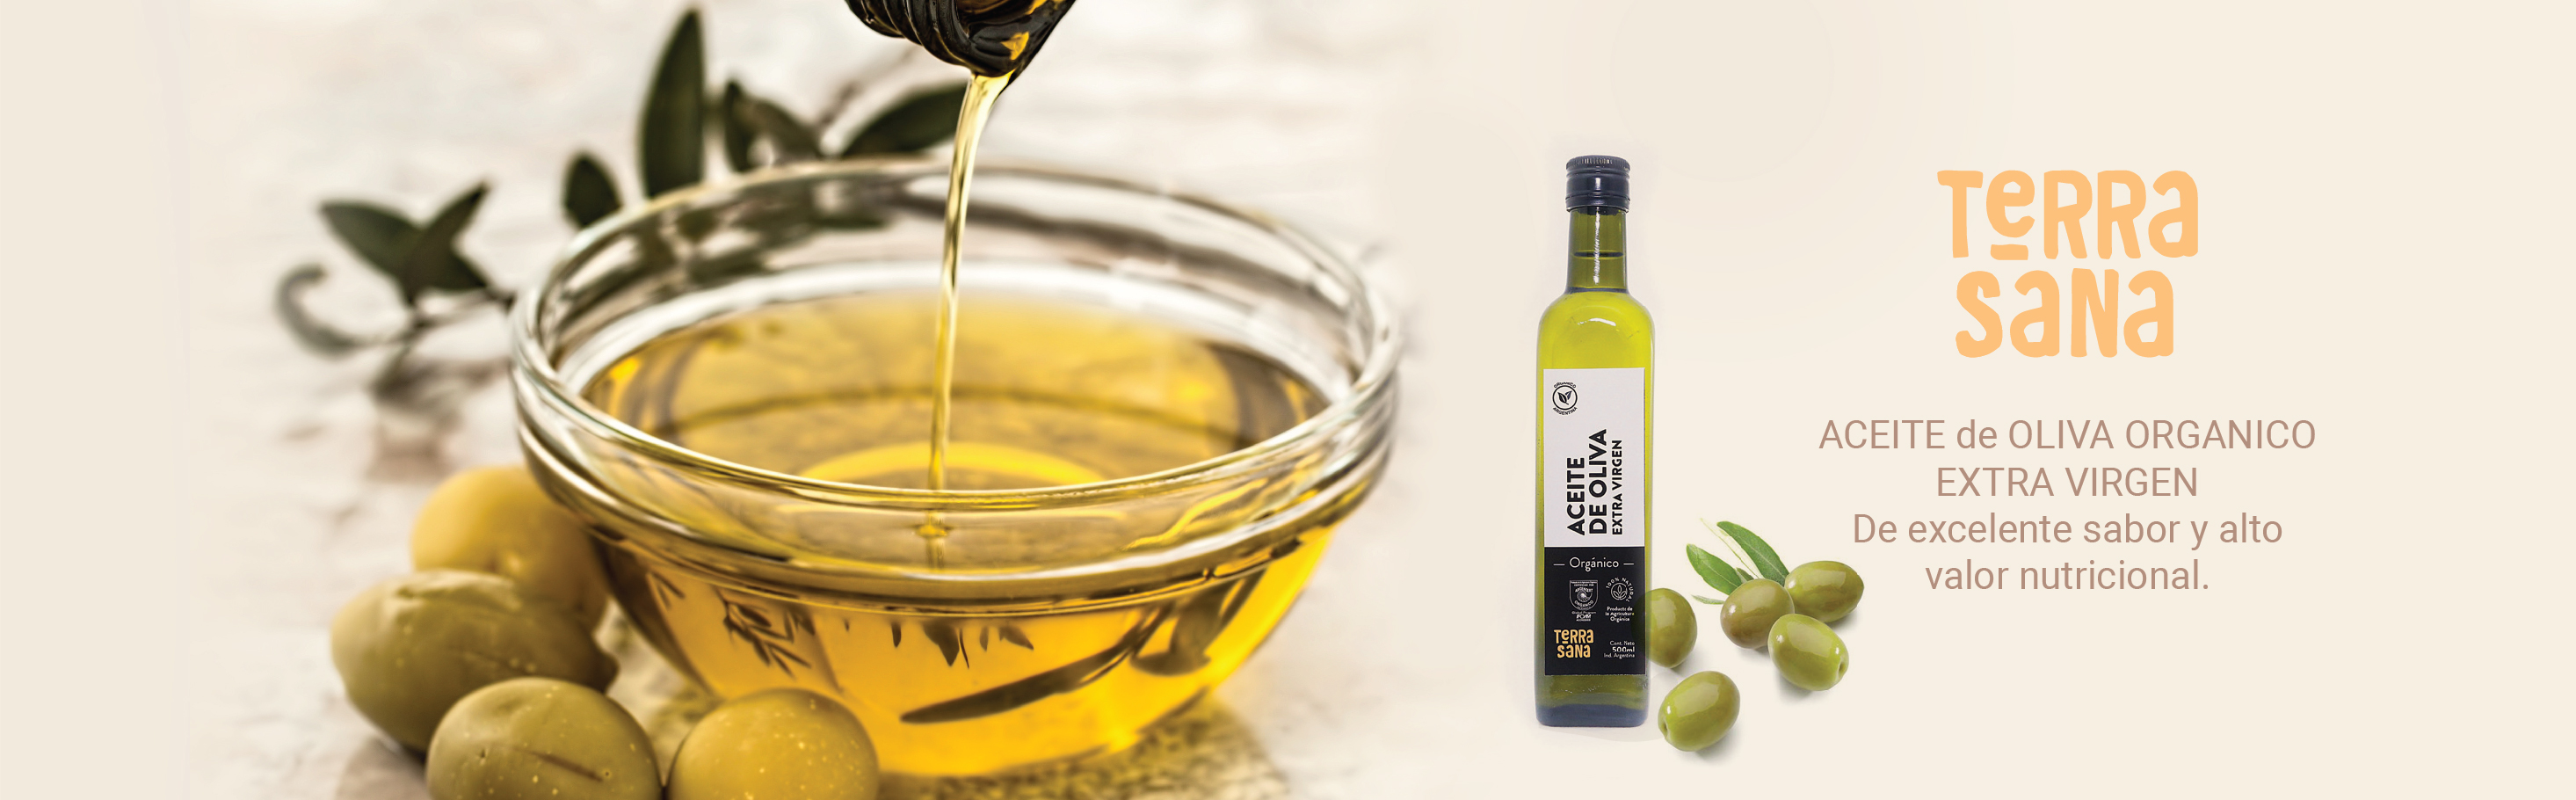 Aceite de oliva orgánico Terrasana